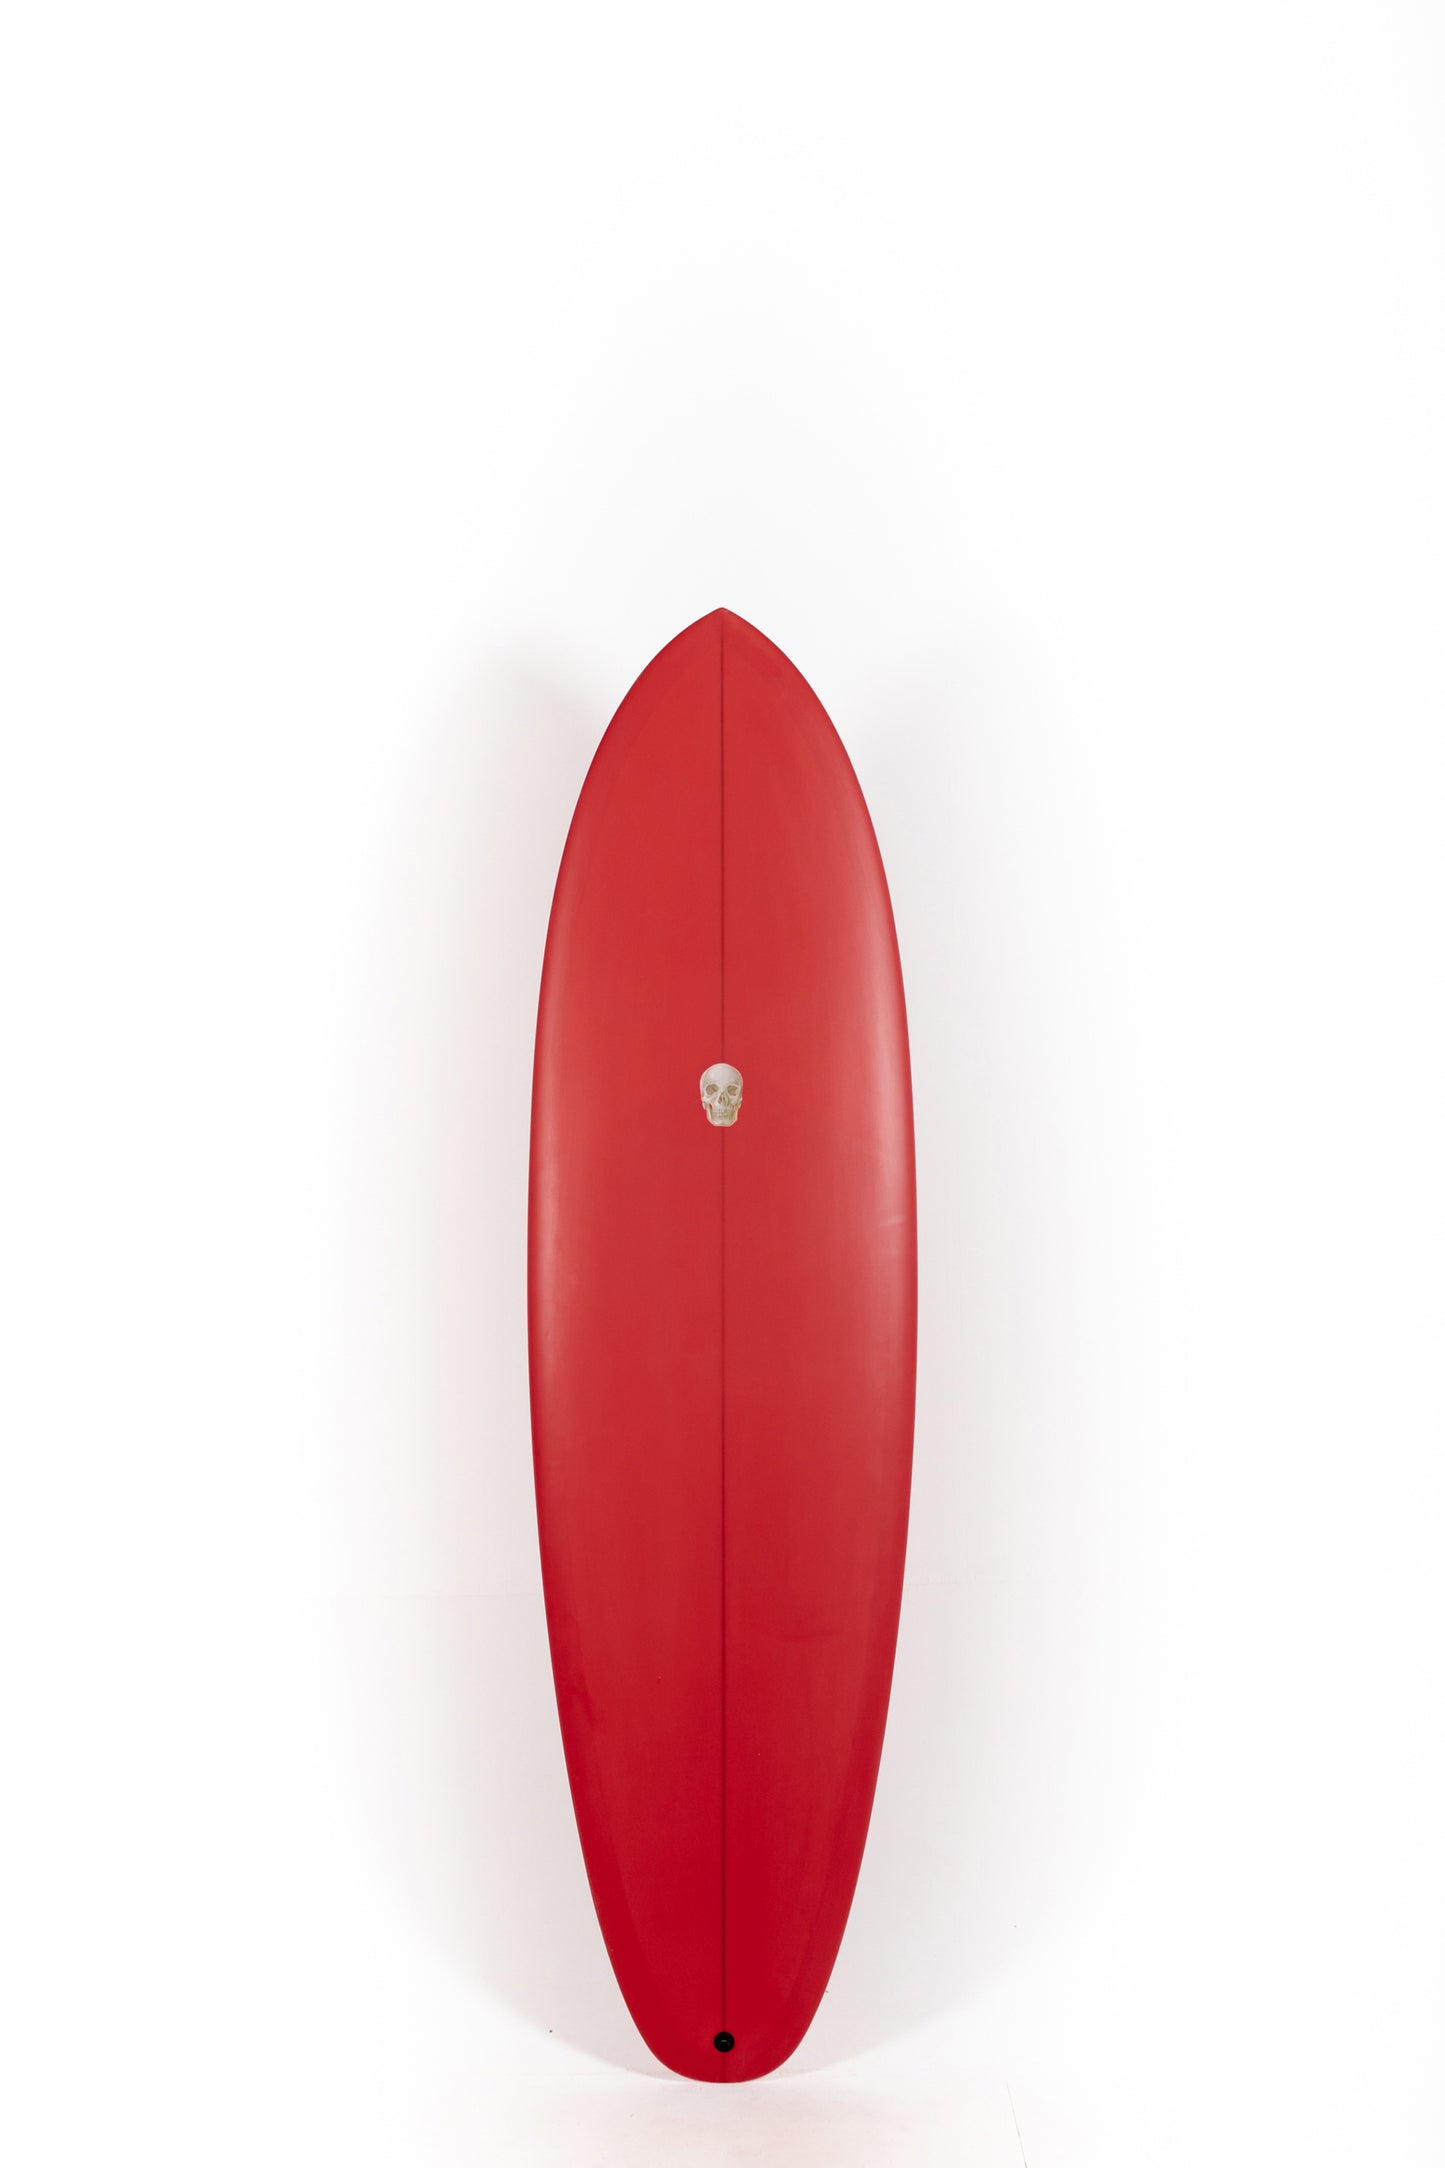 Pukas Surf Shop - Christenson Surfboards - TWIN TRACKER - 6'6" x 21 x 2 5/8 - CX03303